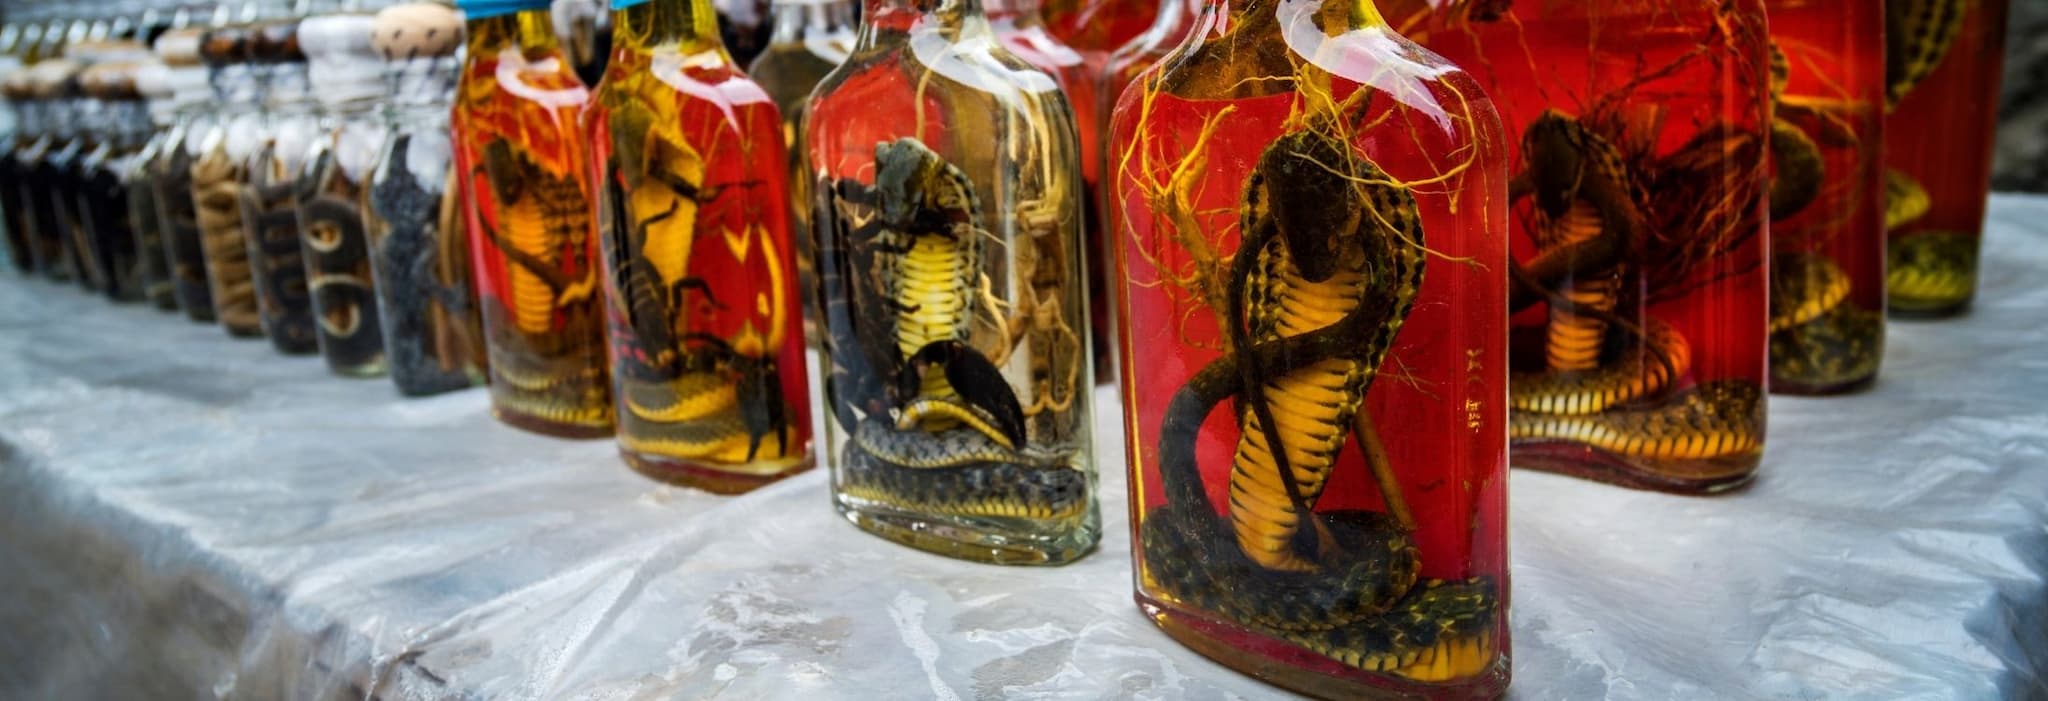 Snake Liquor, Vietnam